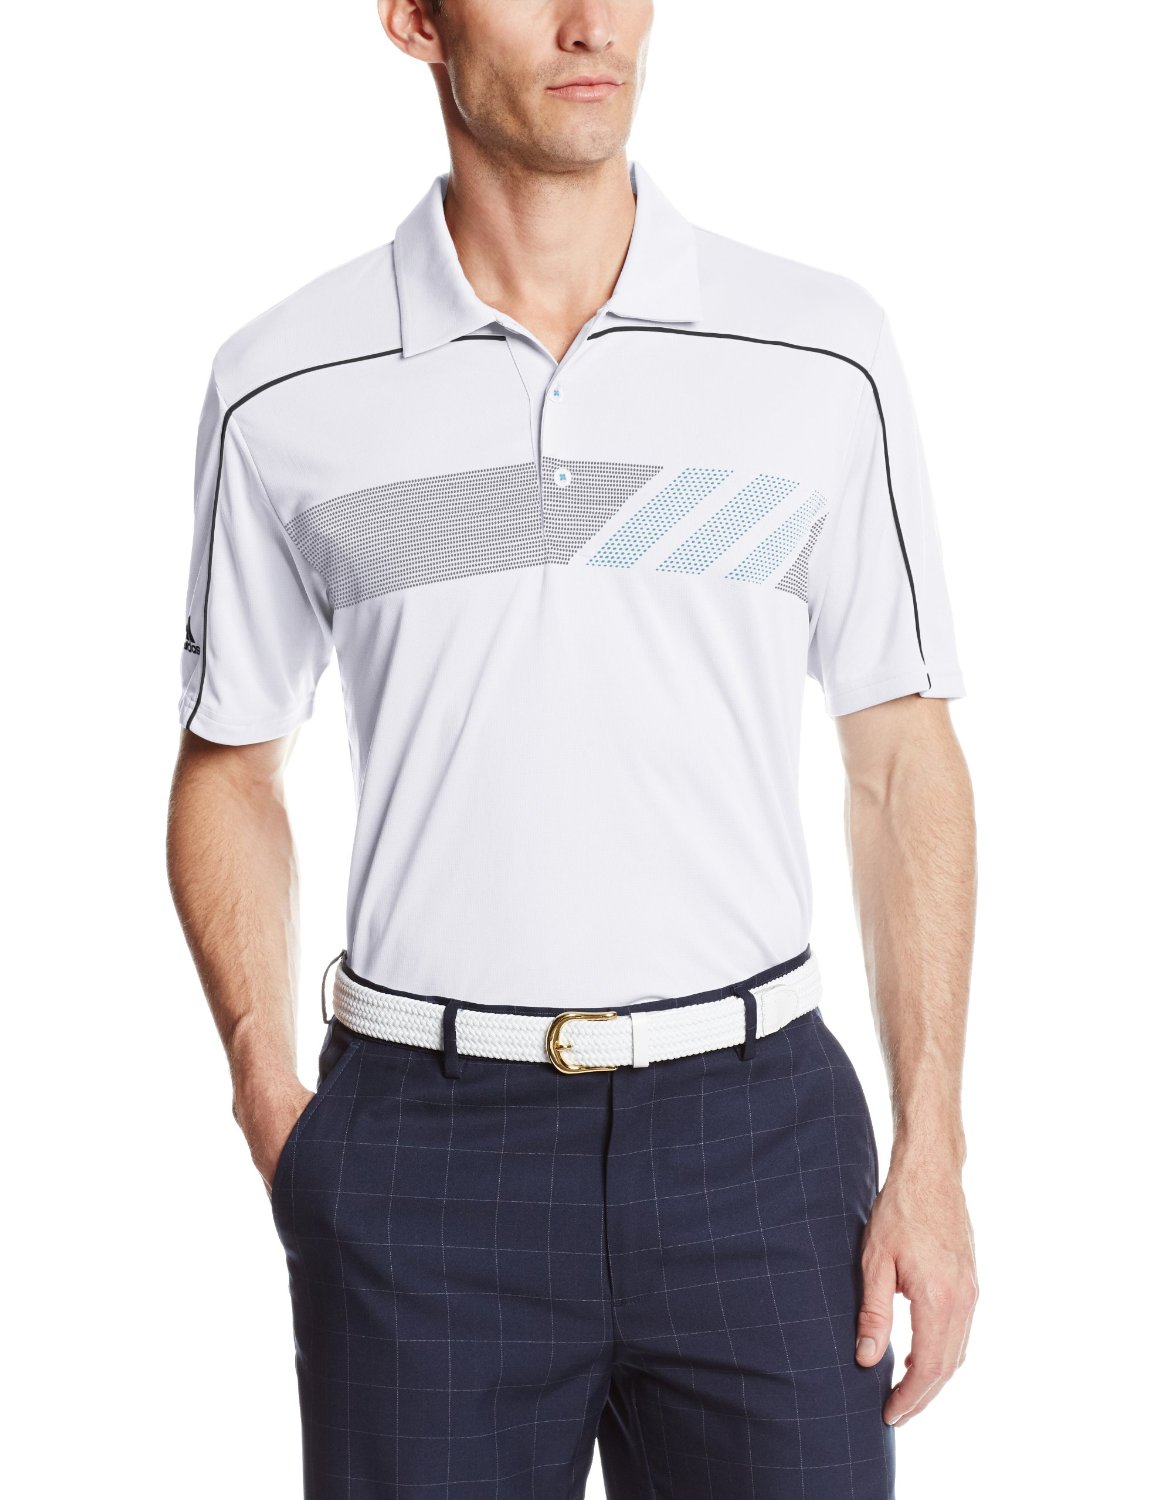 Adidas Climachill Print Golf Polo Shirts